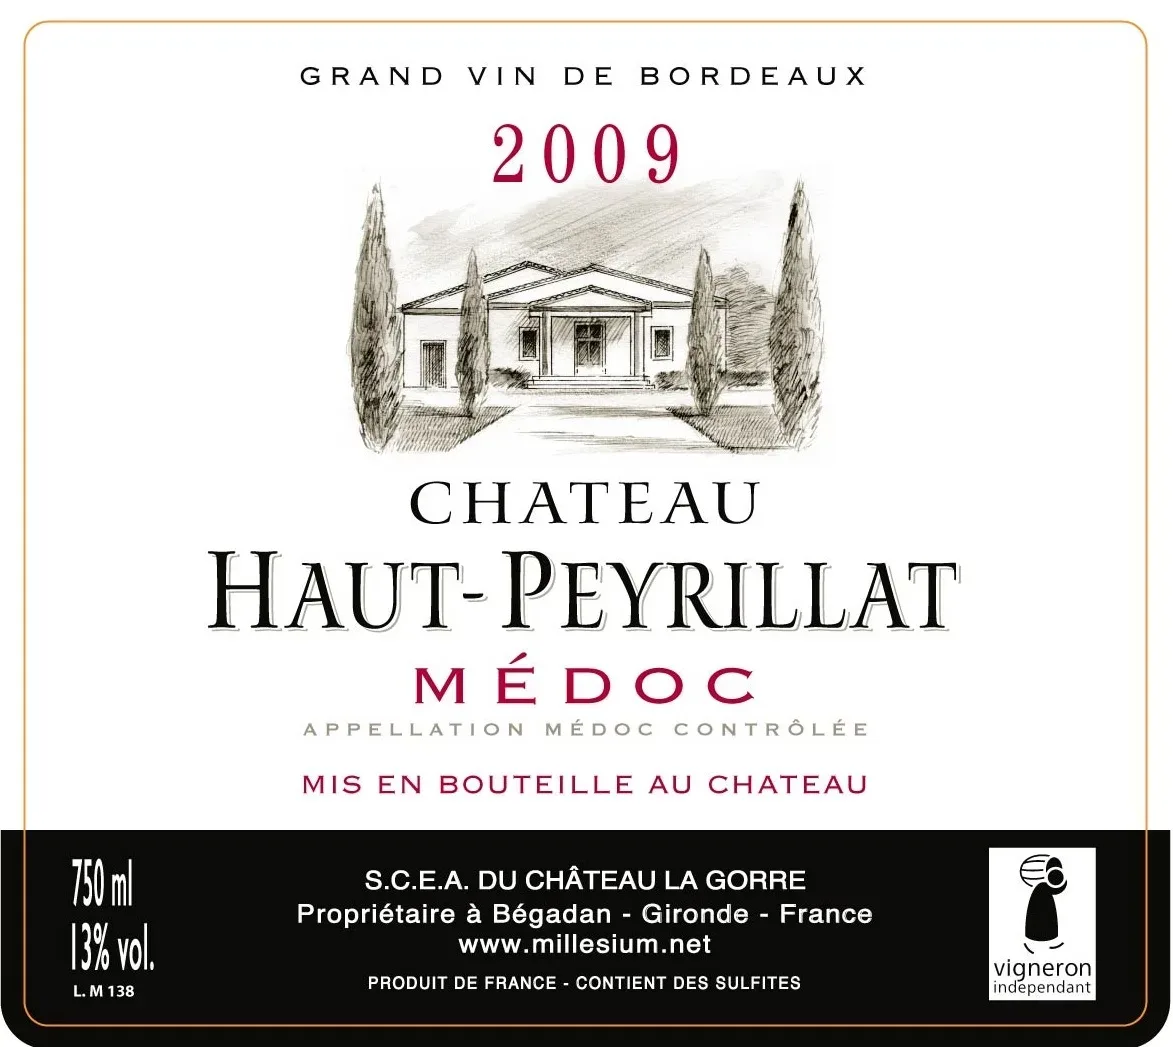 Chateau Haut-Peyrillat Medoc front label